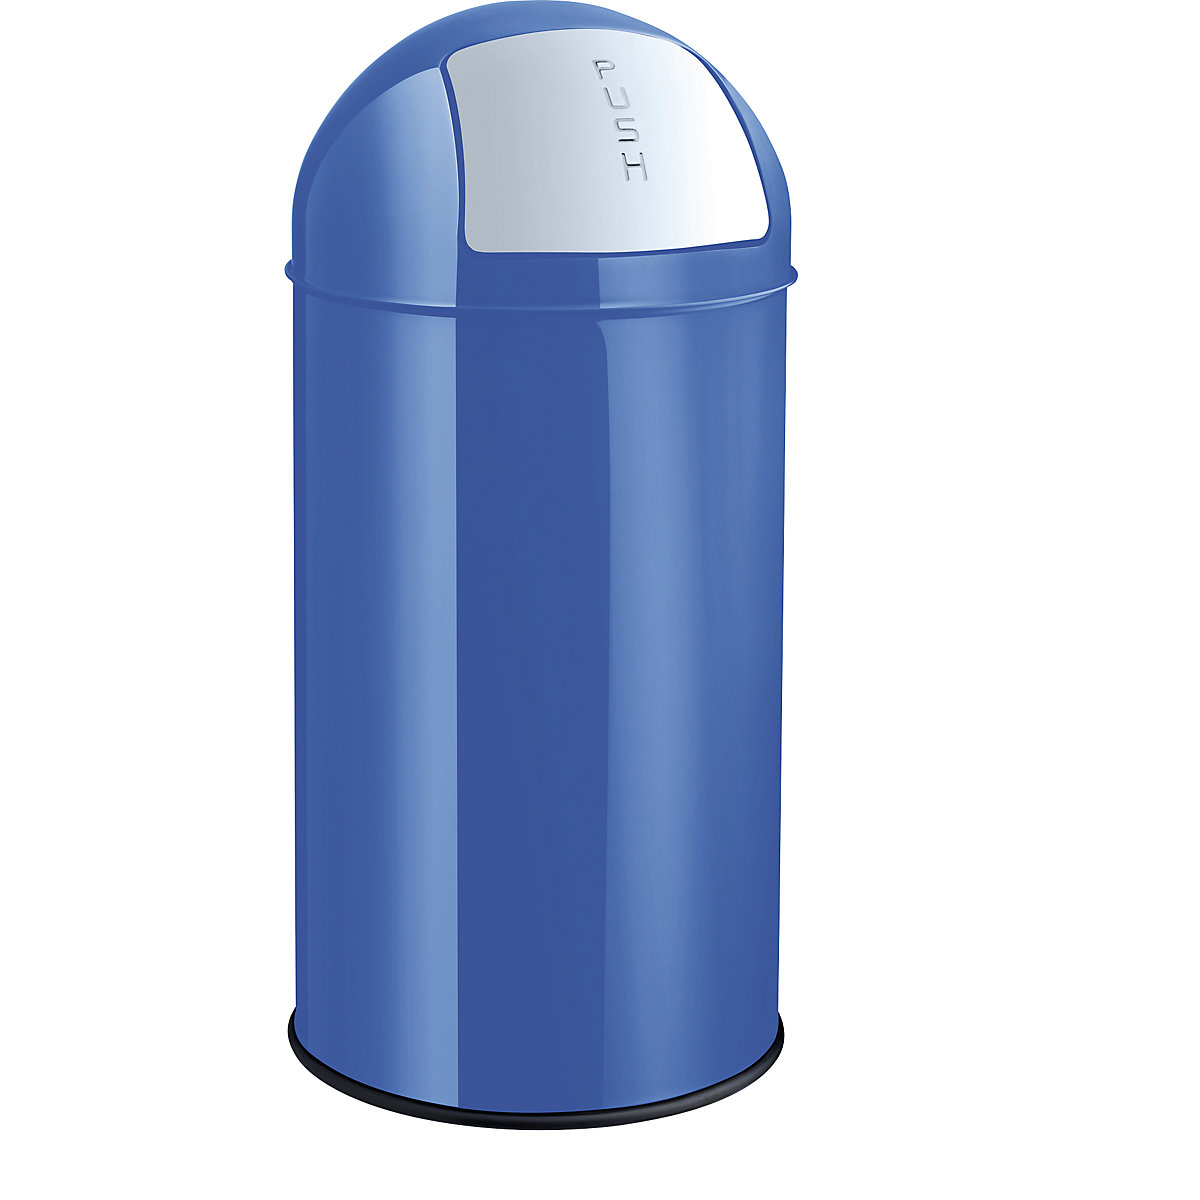 Jeklena posoda za odpadke s potisno loputo – helit, prostornina 30 l, VxØ 650 x 300 mm, moder-3